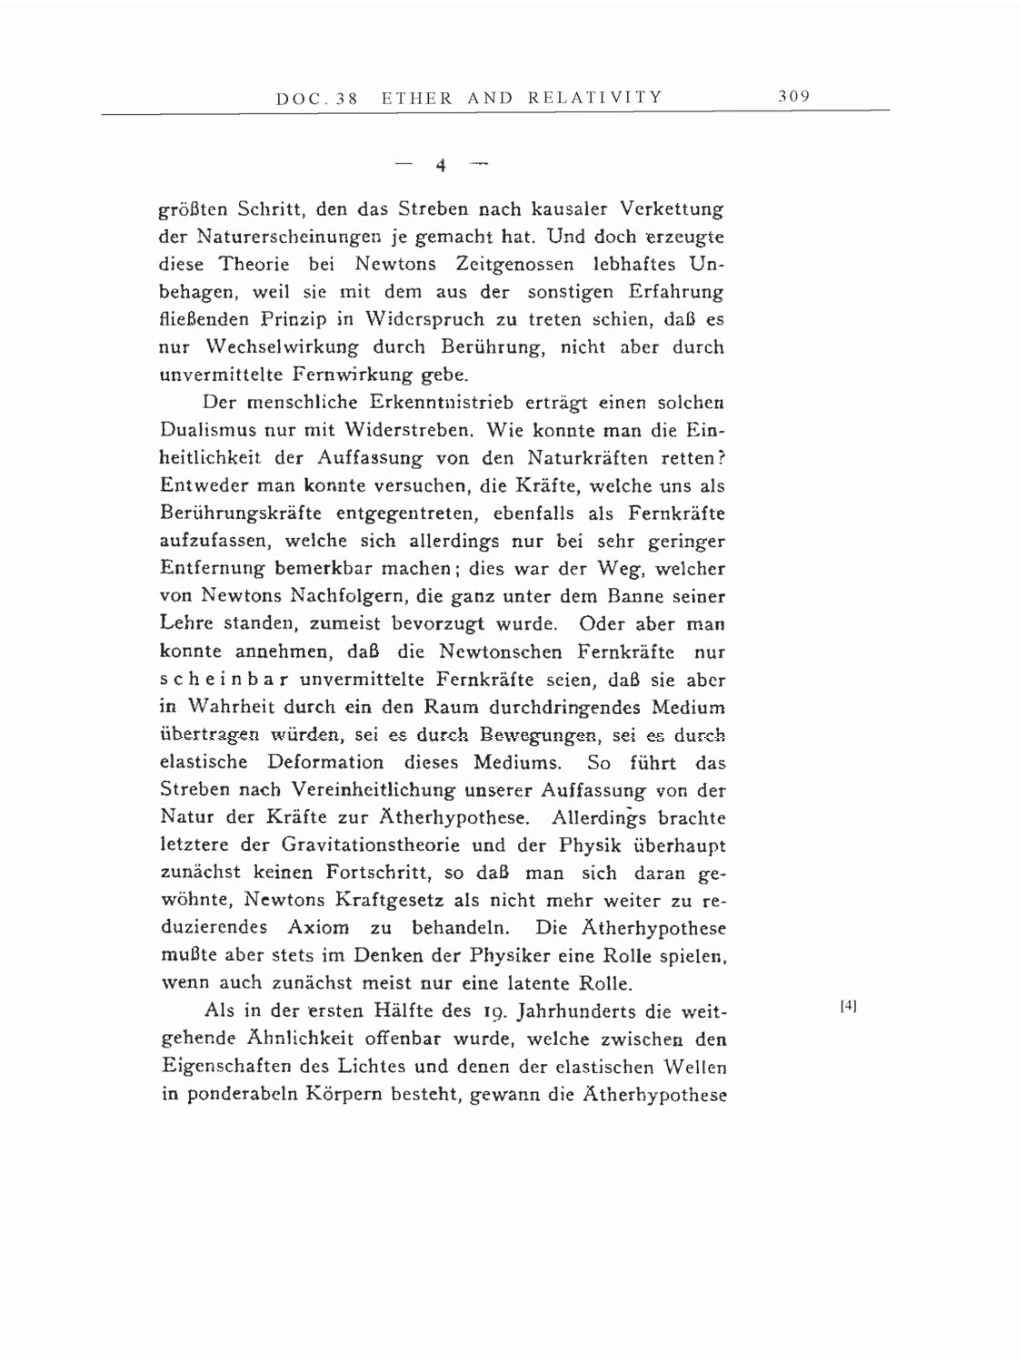 Volume 7: The Berlin Years: Writings, 1918-1921 page 309